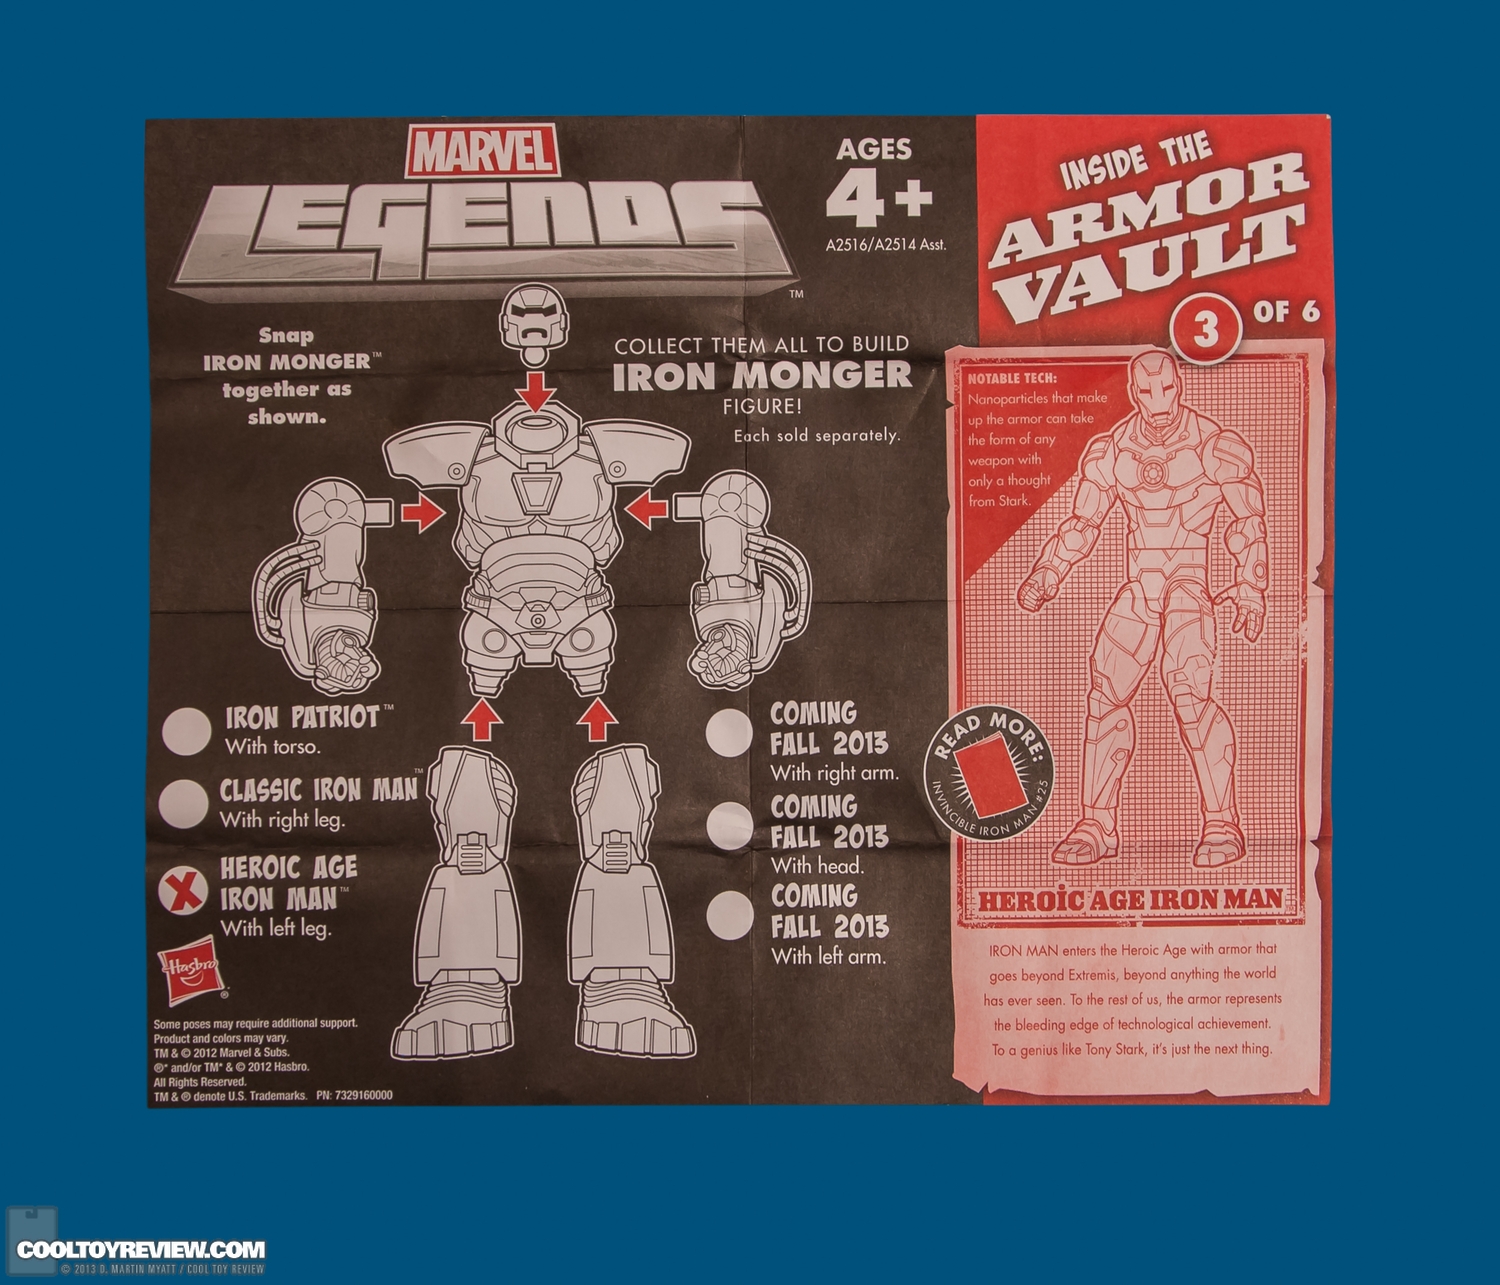 Heroic-Age-Iron-Man-Marvel-Legends-Iron-Monger-Series-011.jpg